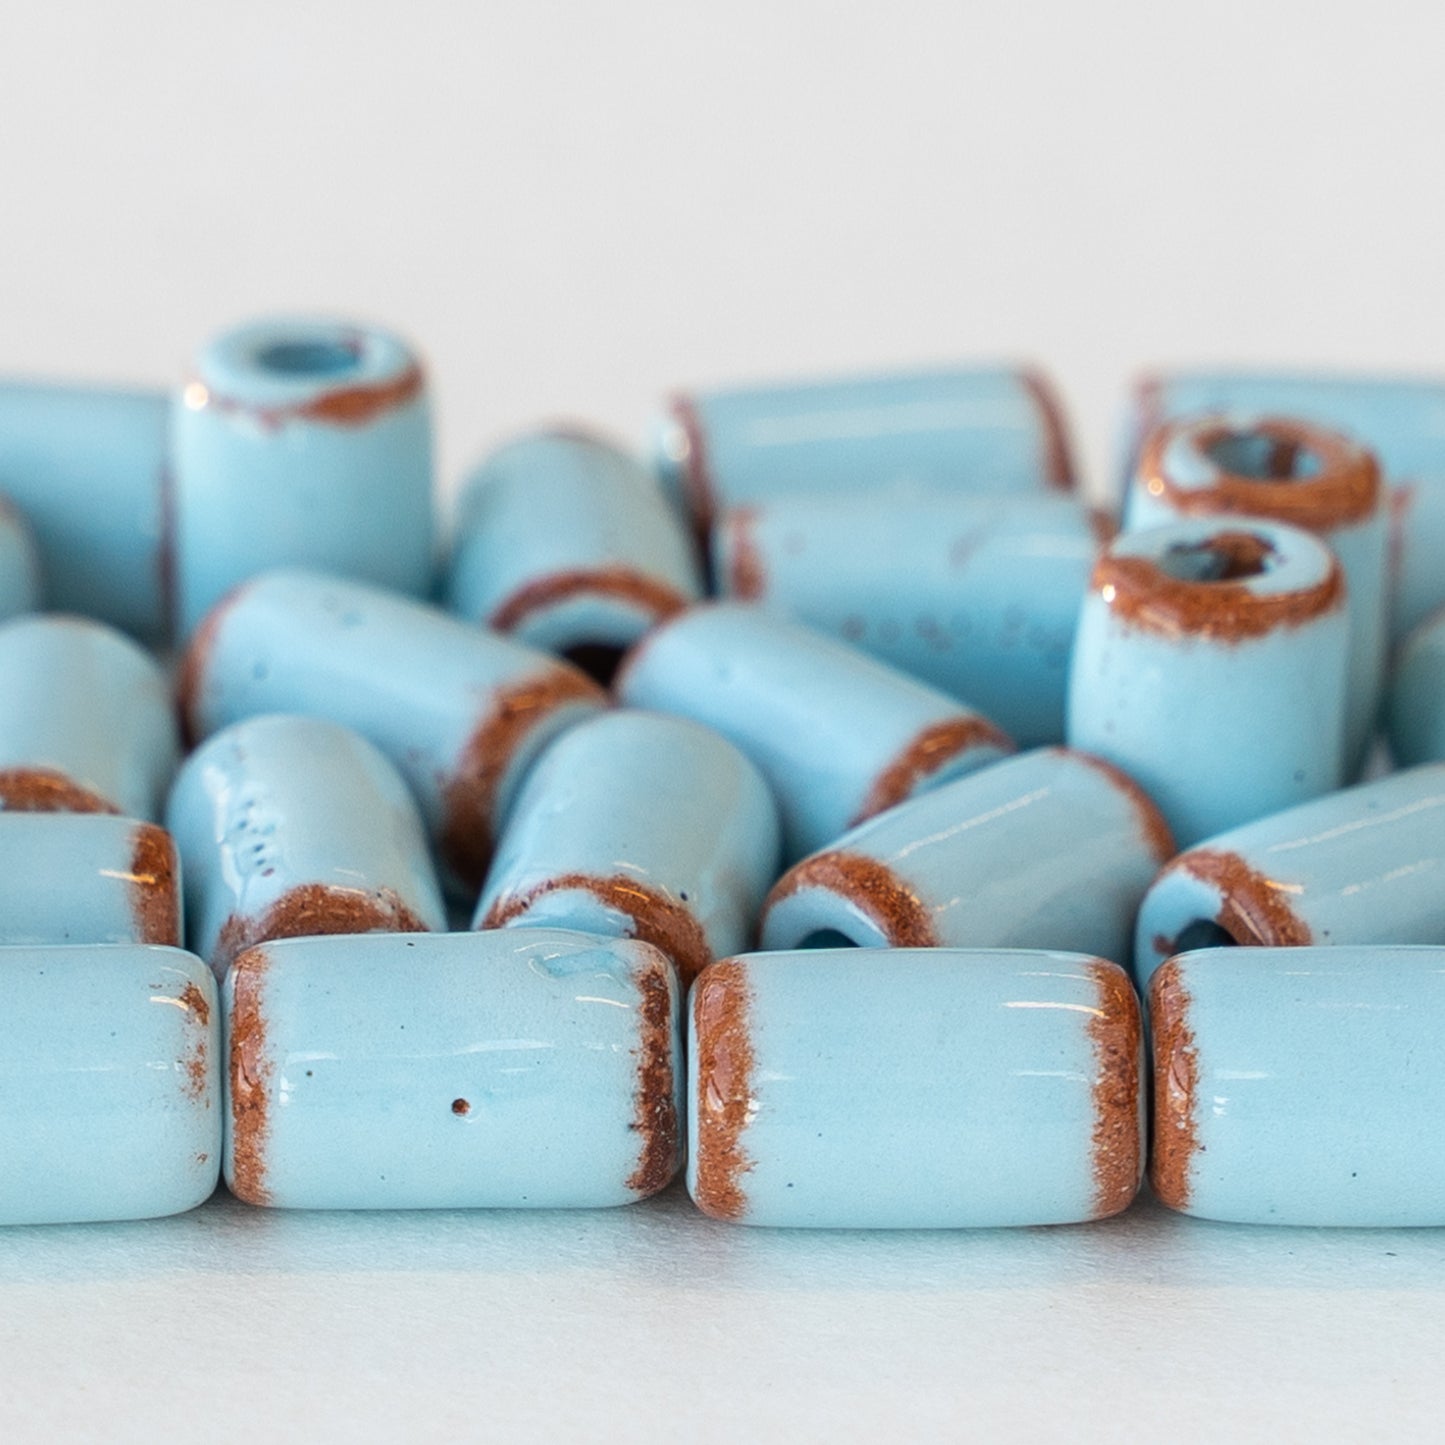 6x10mm Shiny Glazed Ceramic Tube Beads - Baby Blue